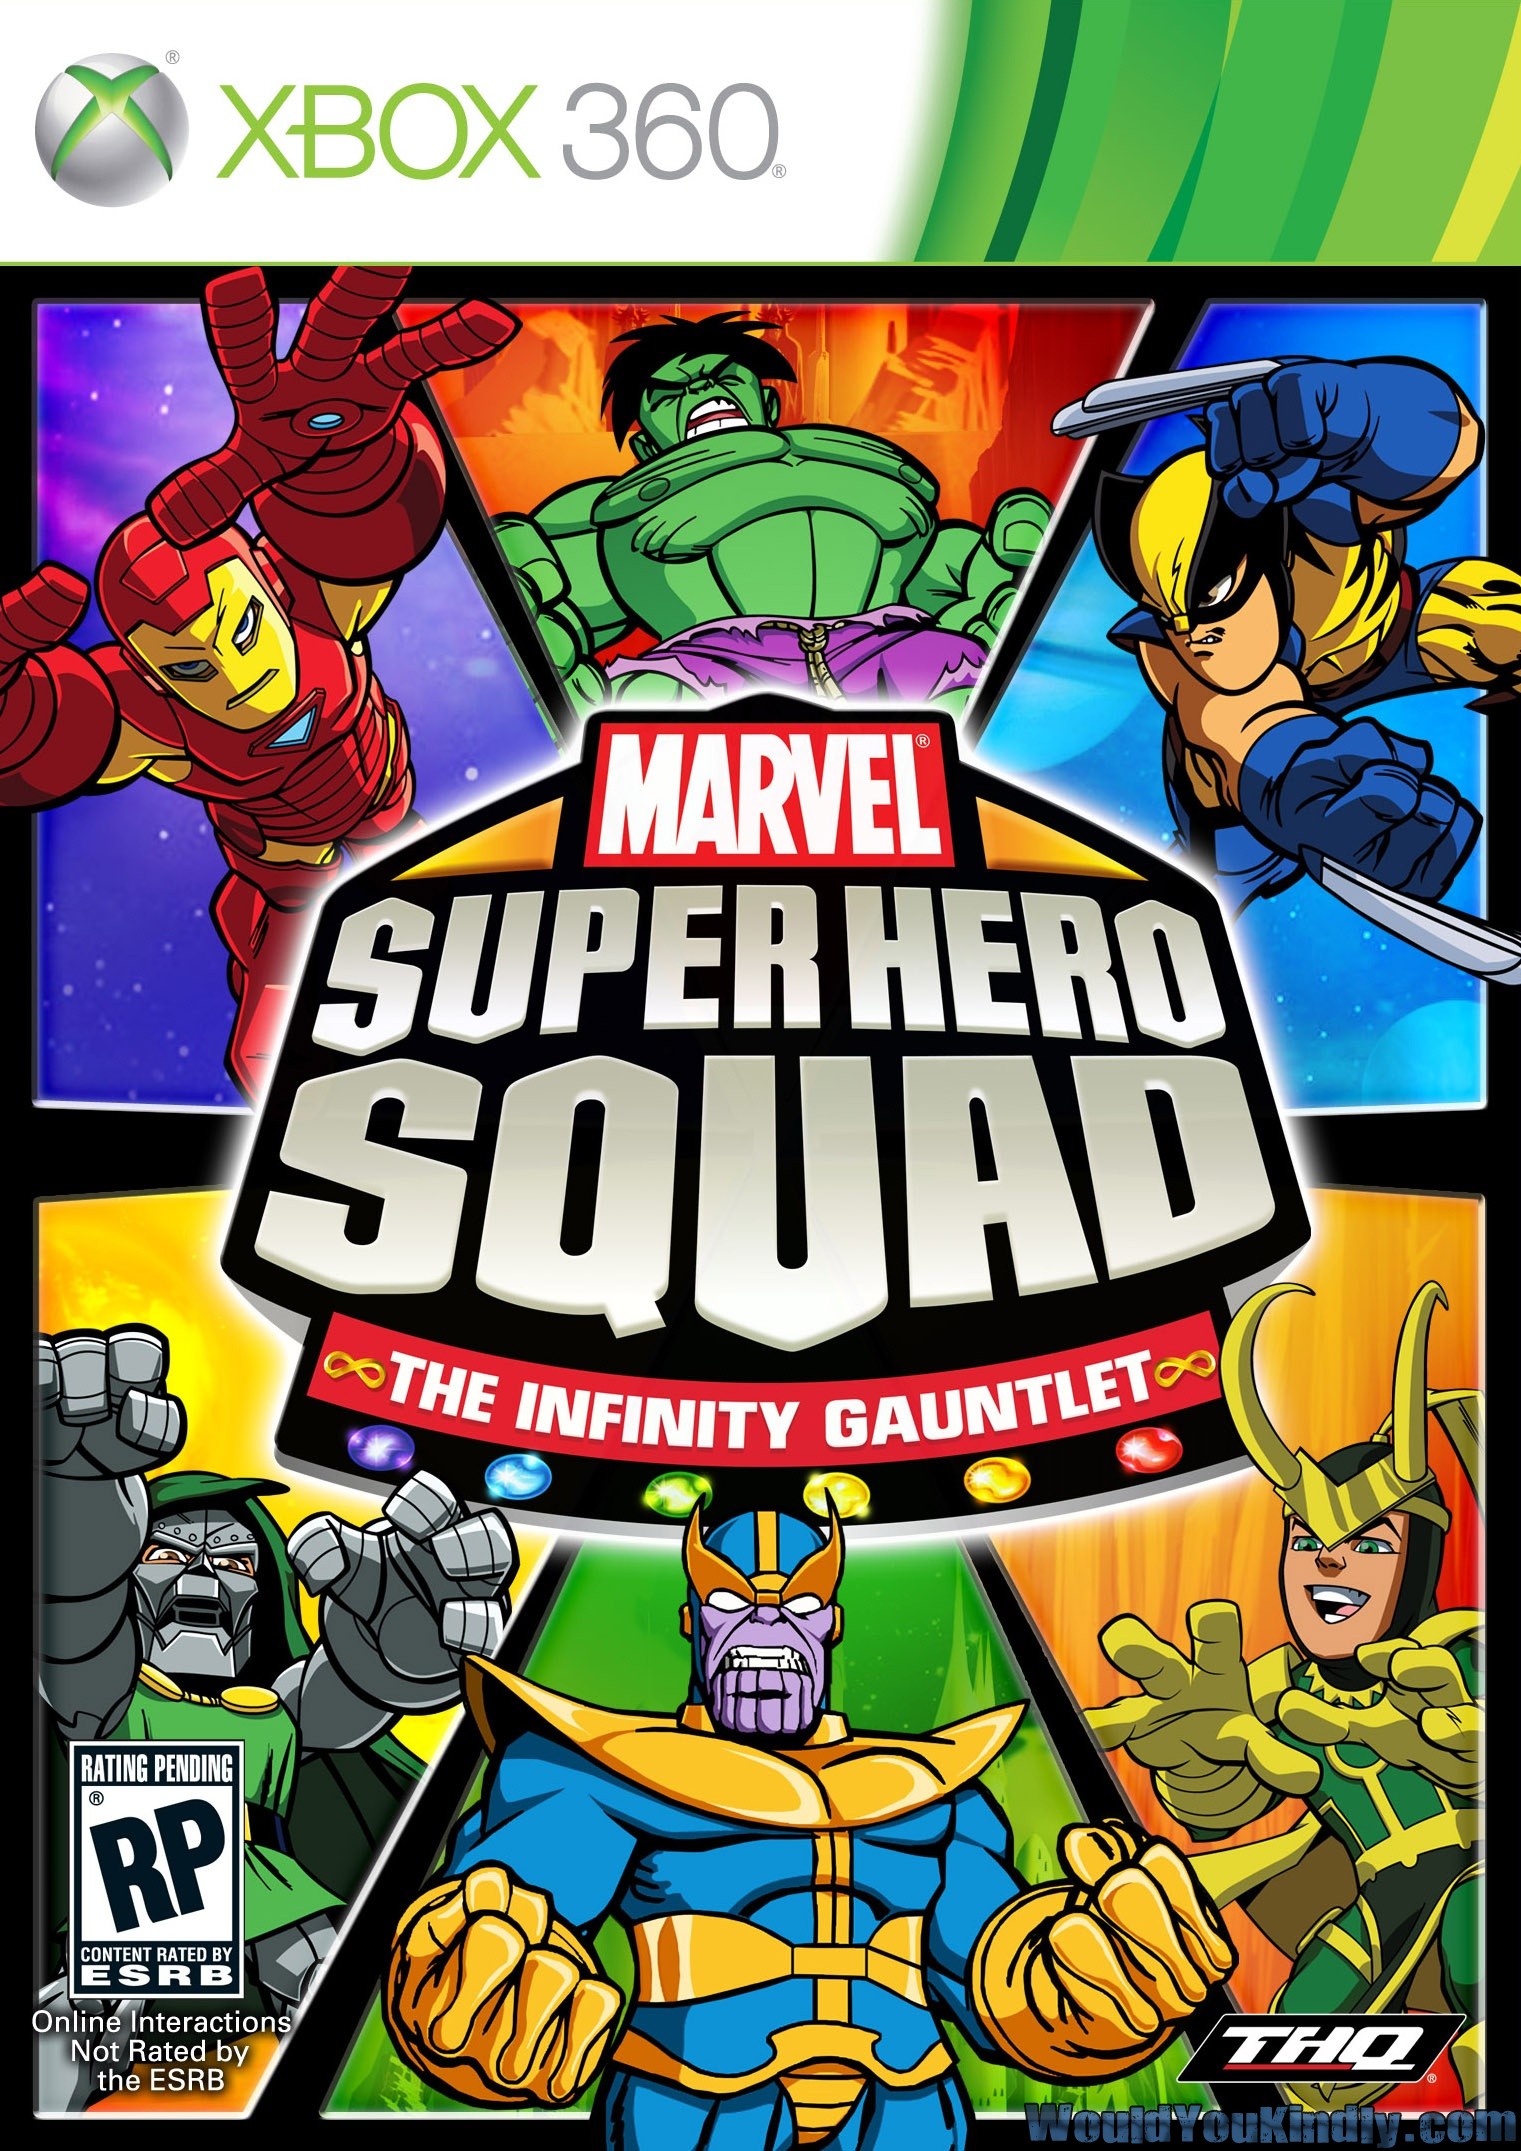 Marvel’s Super Hero Squad returns